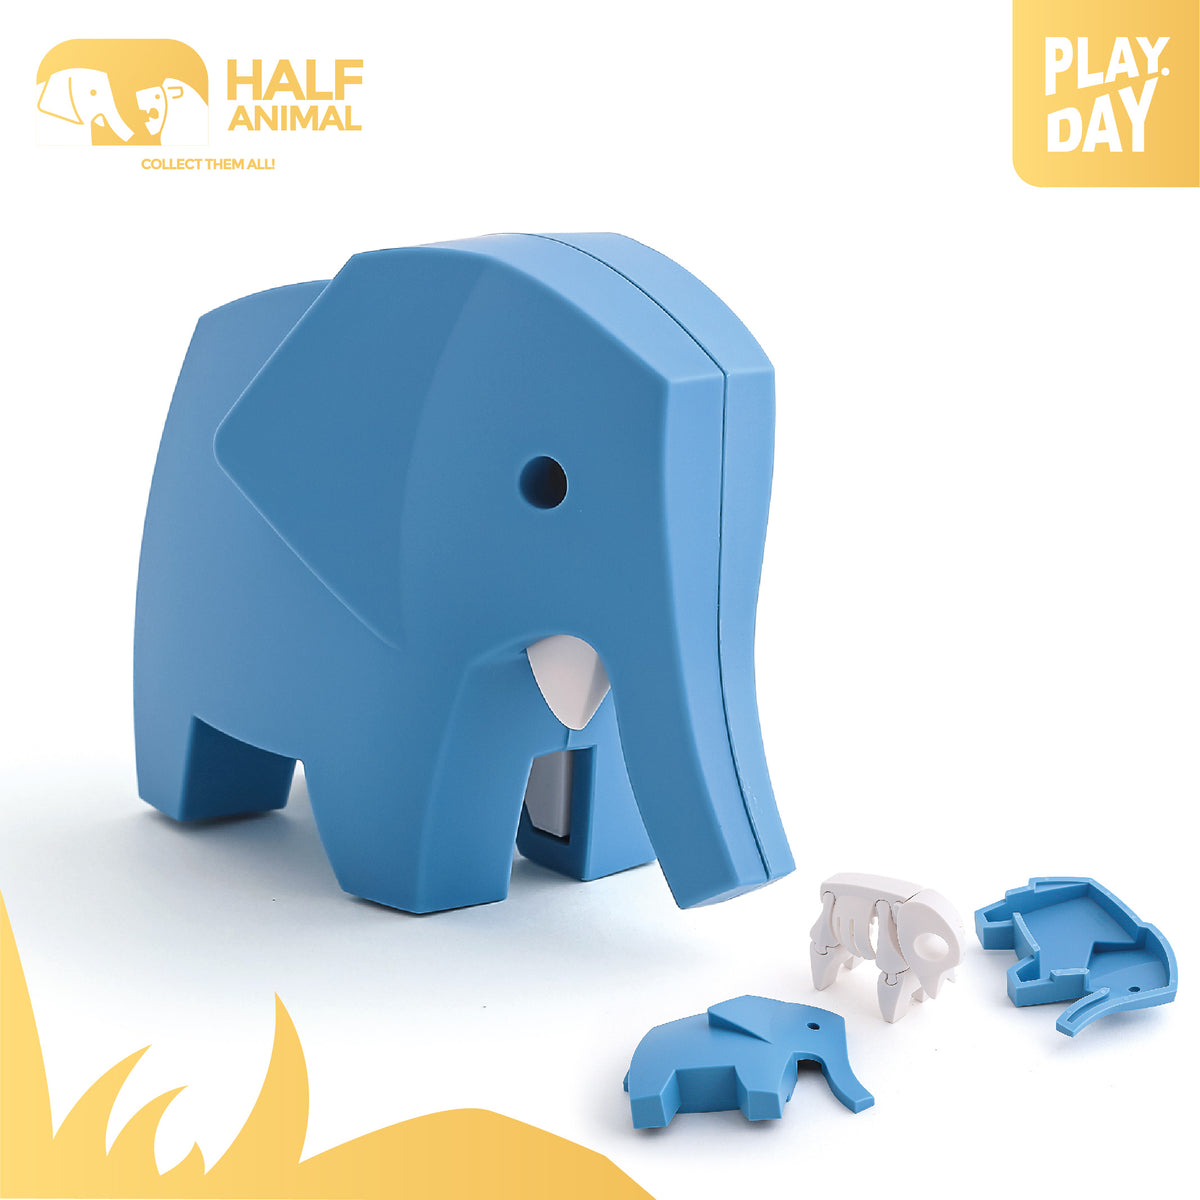 Halftoys Half Animal - Elephant